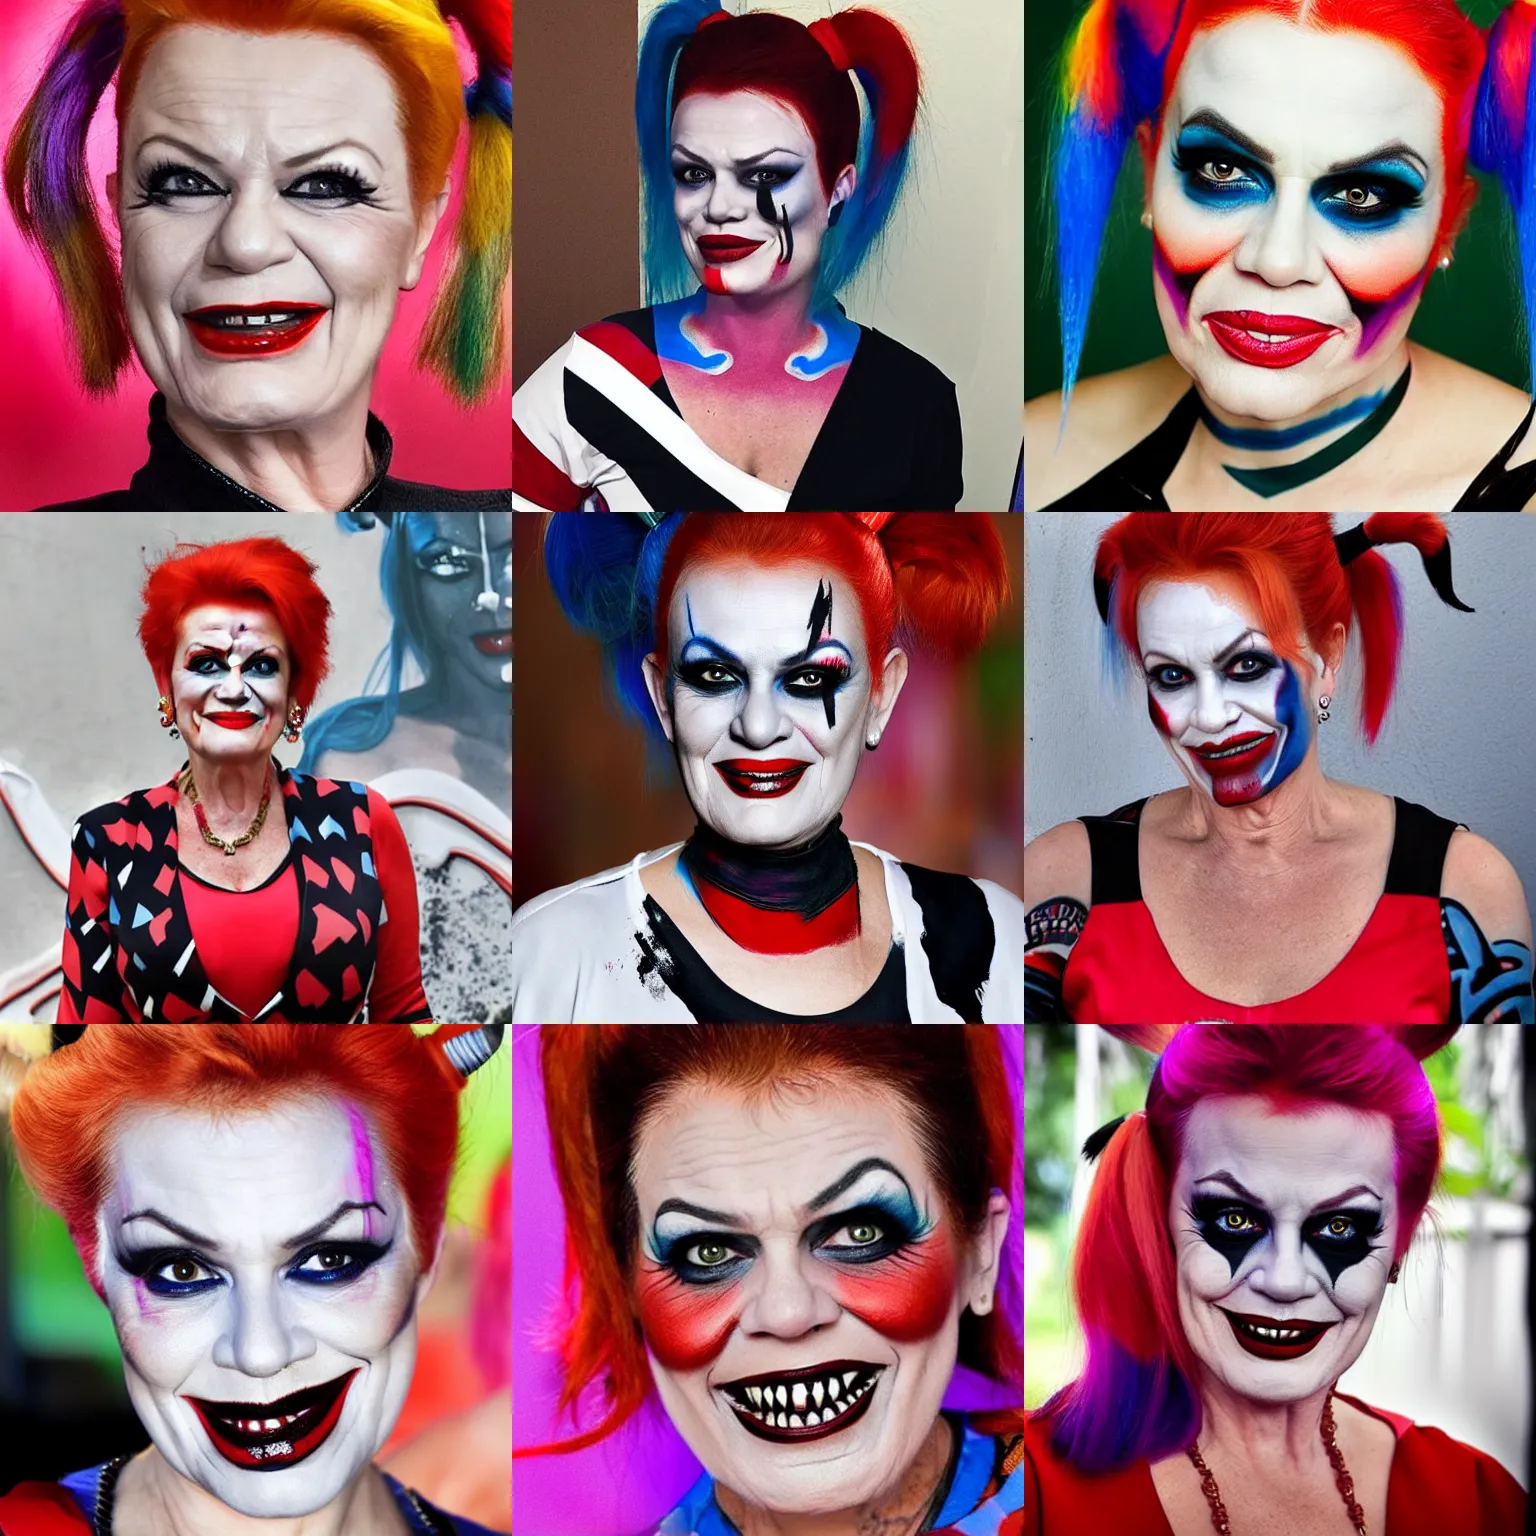 Prompt: Pauline Hanson wearing Harley Quinn makeup, portrait photograph, ultra realistic